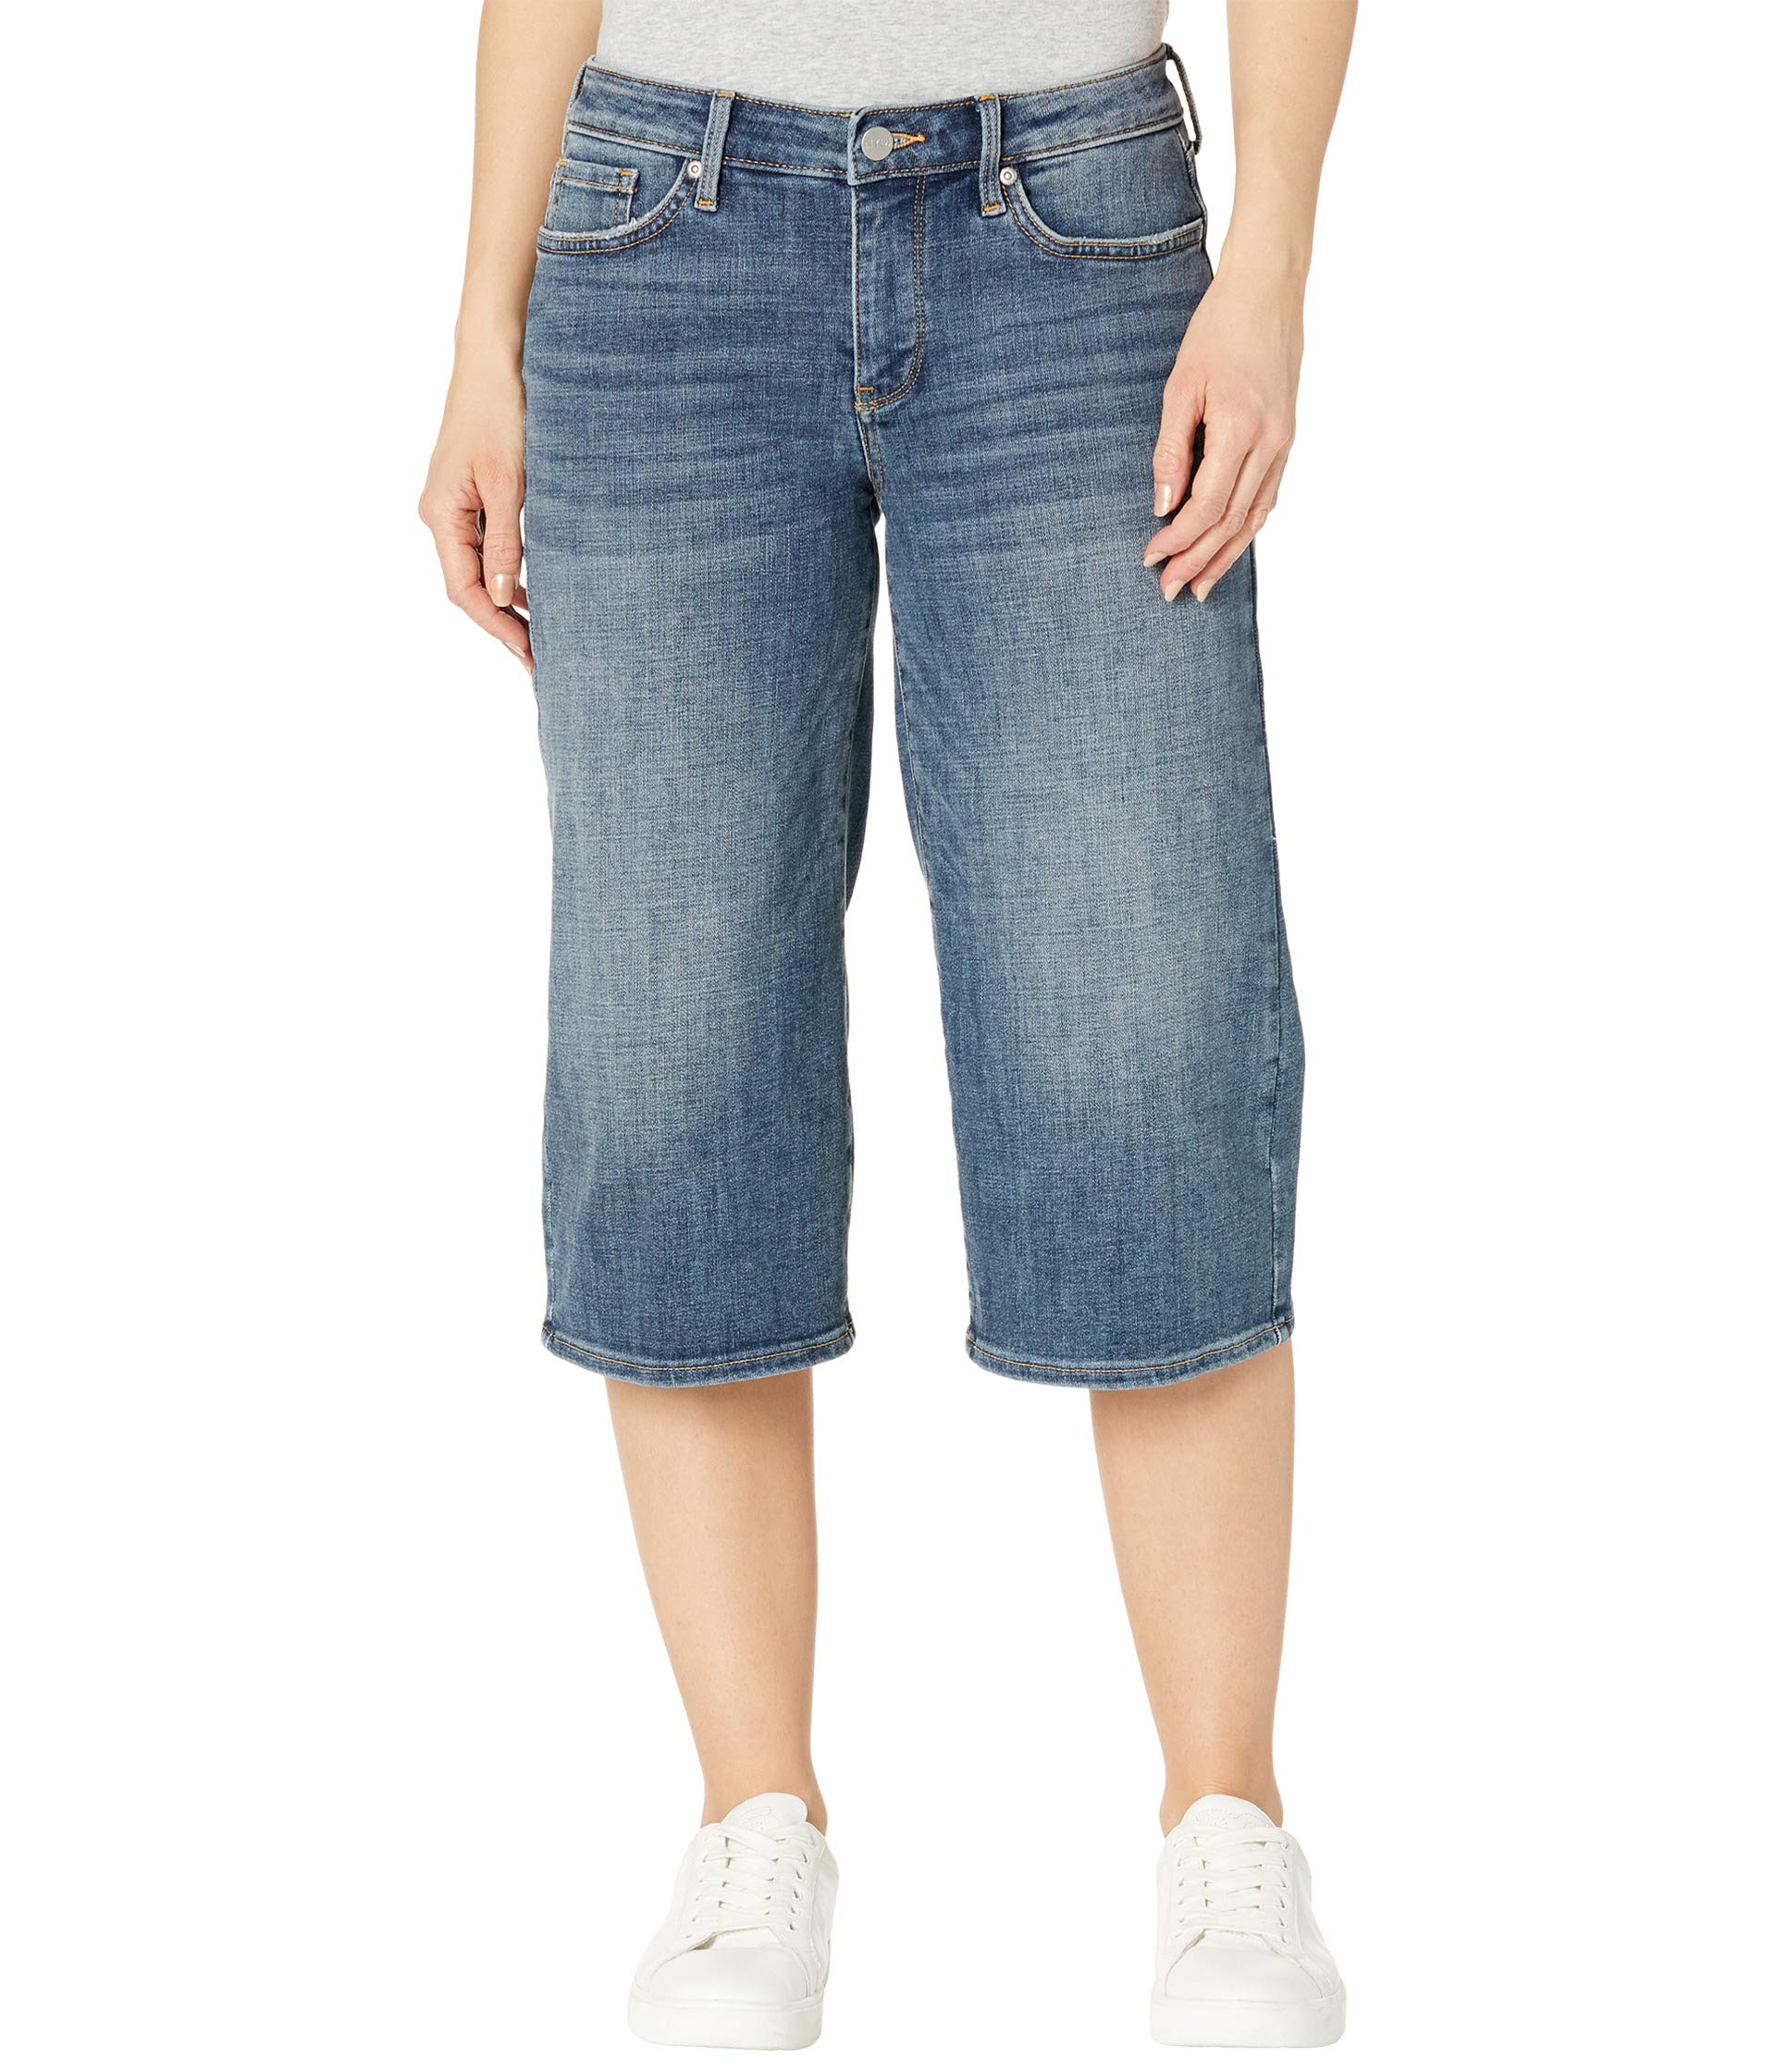 Джинсы NYDJ, Petite Wide Leg Pedal Pusher Jeans in Seline